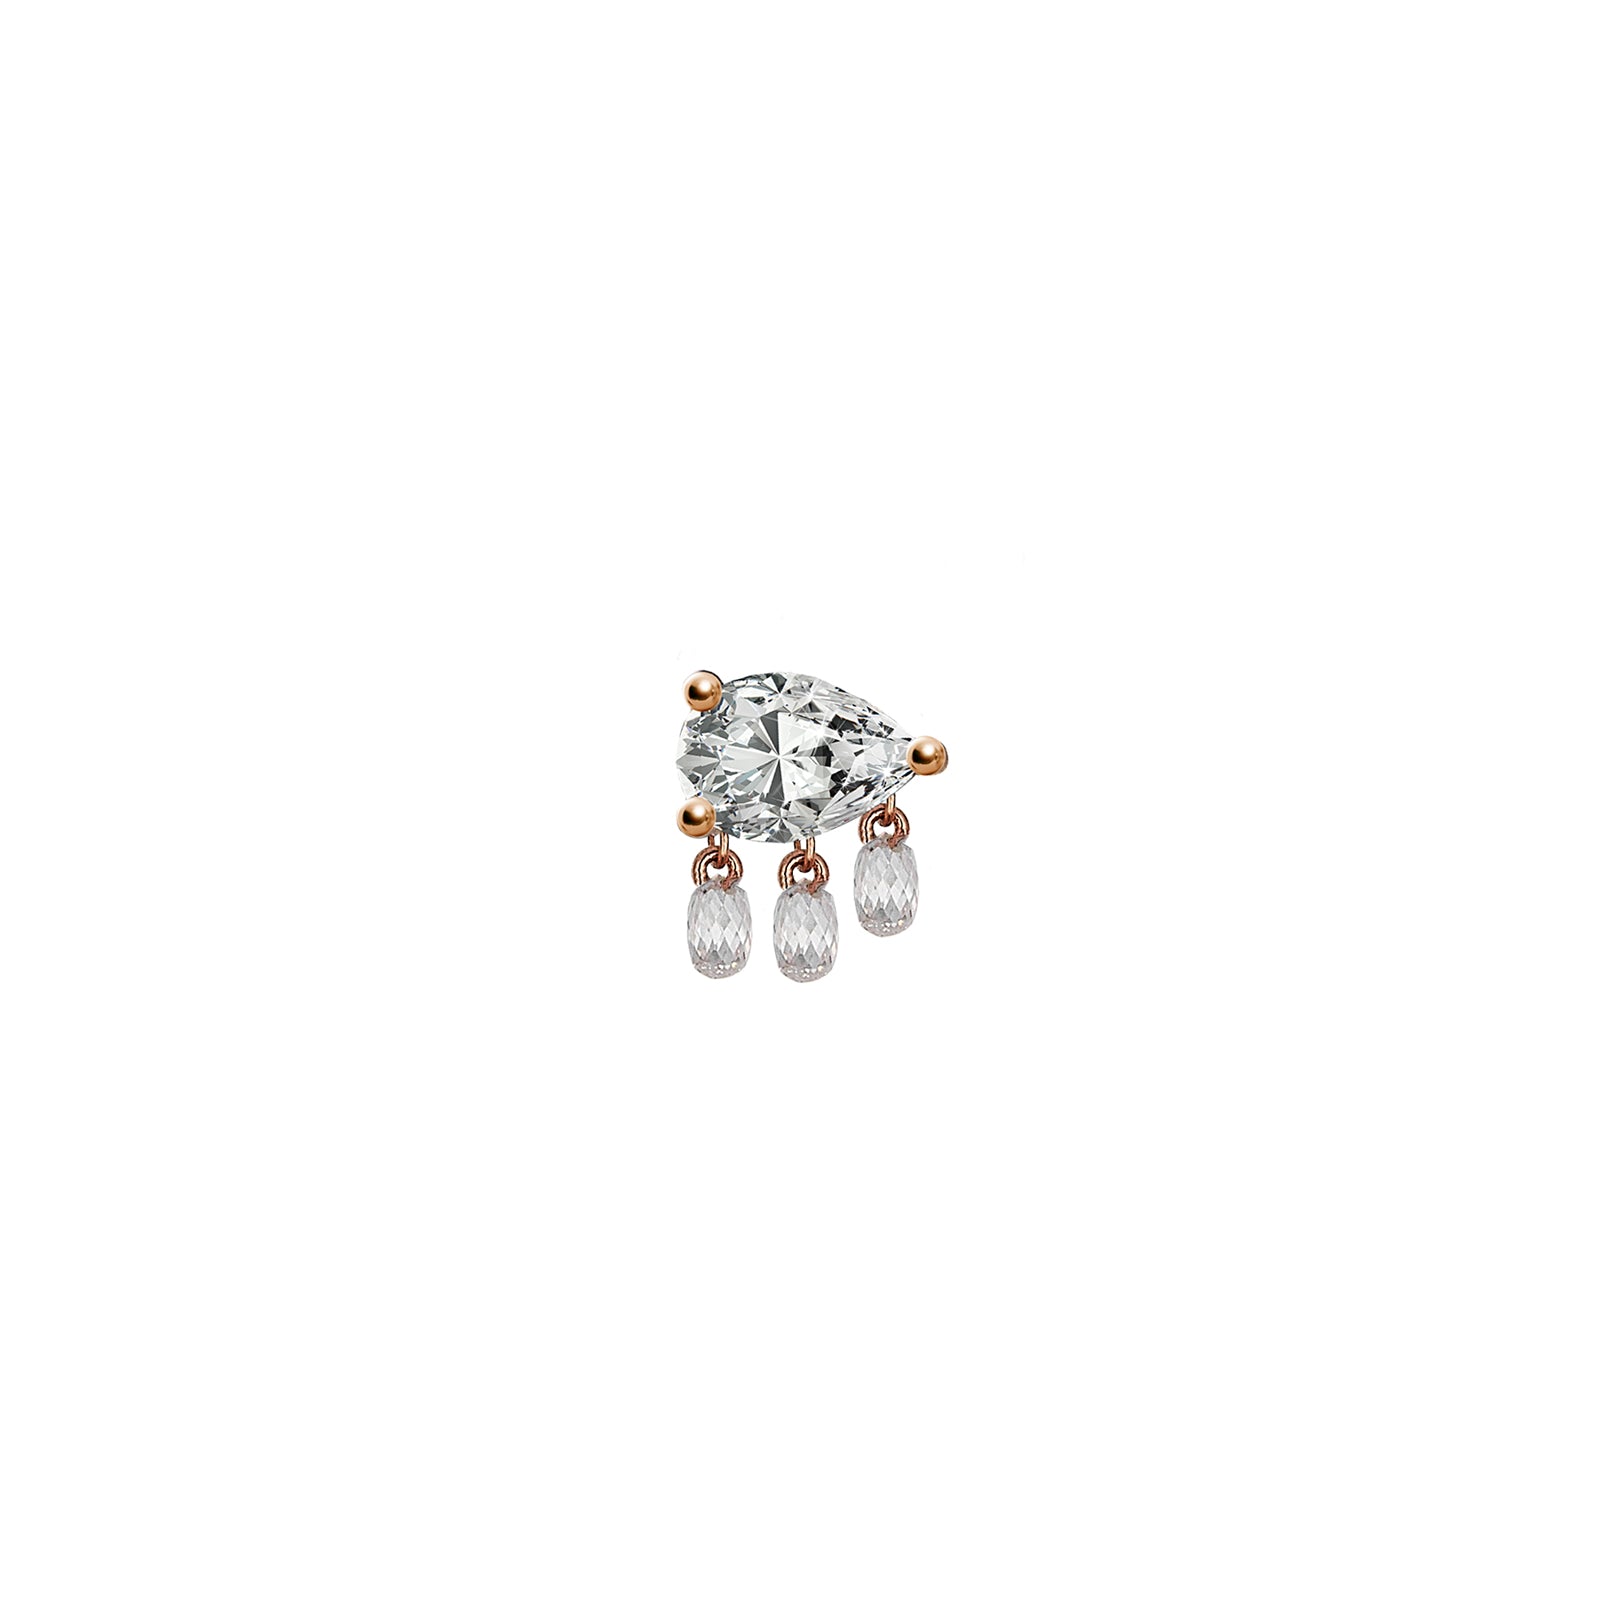 Vita Earring Roslow Gold / Pear and Briolette White Diamonds